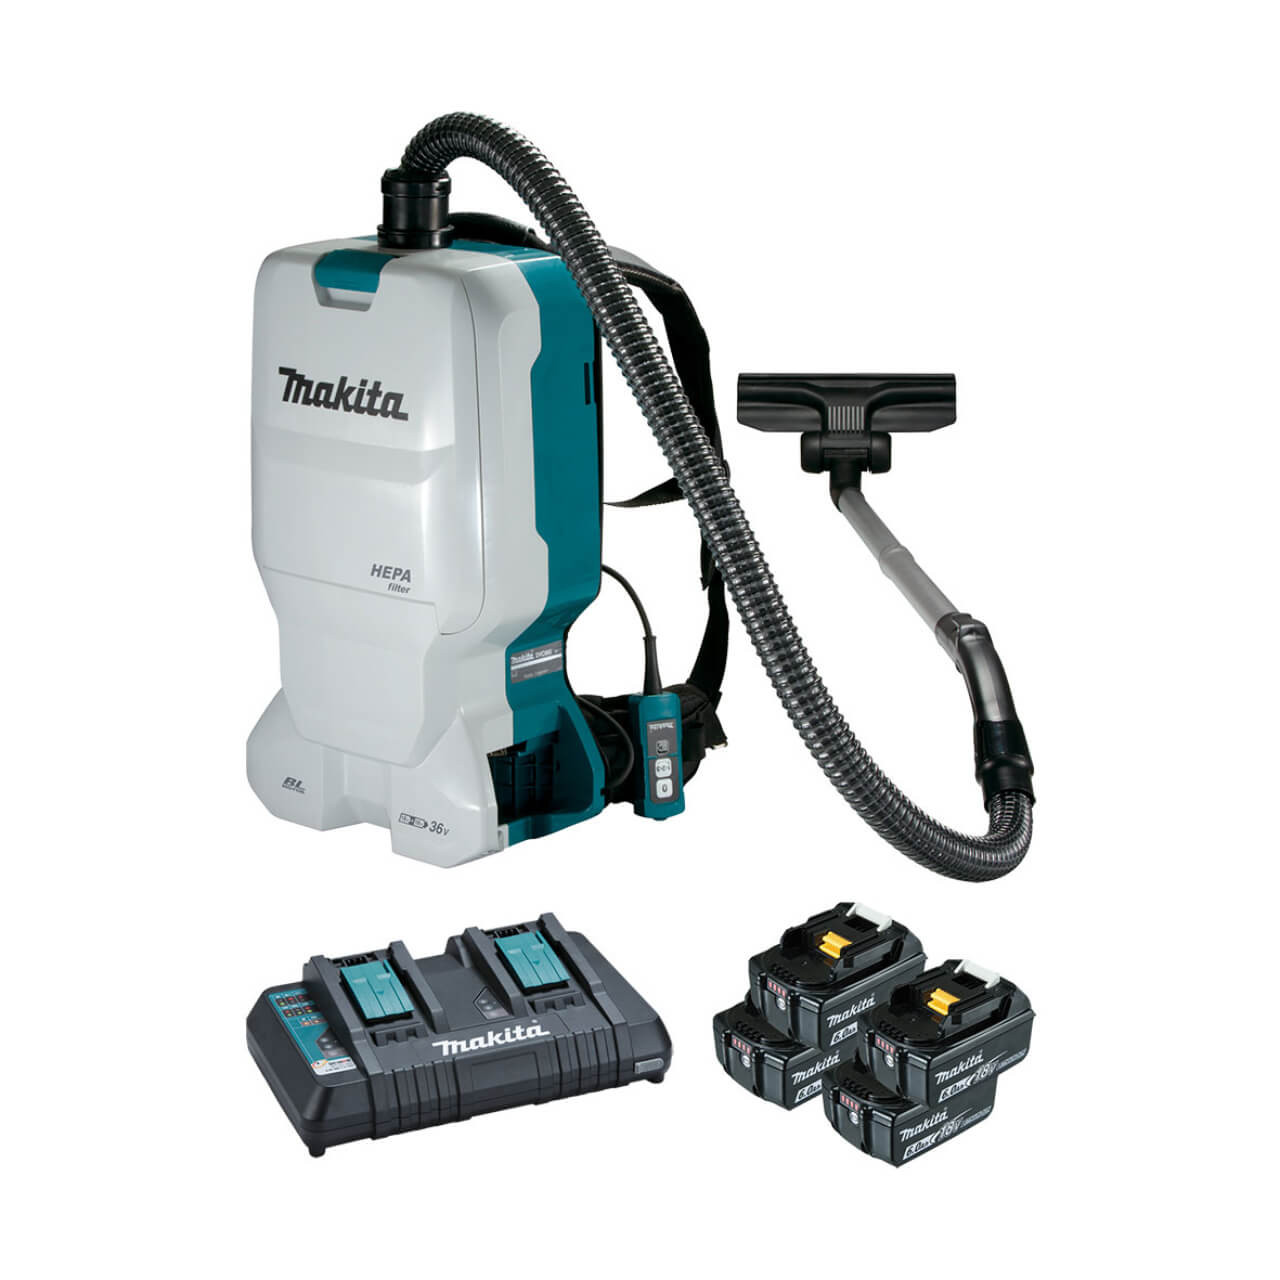 Makita 18Vx2 BRUSHLESS Backpack Vacuum Kit. 6L Tank Capacity - Includes 4 x 6.0Ah Batteries. Dual Port Rapid Charger